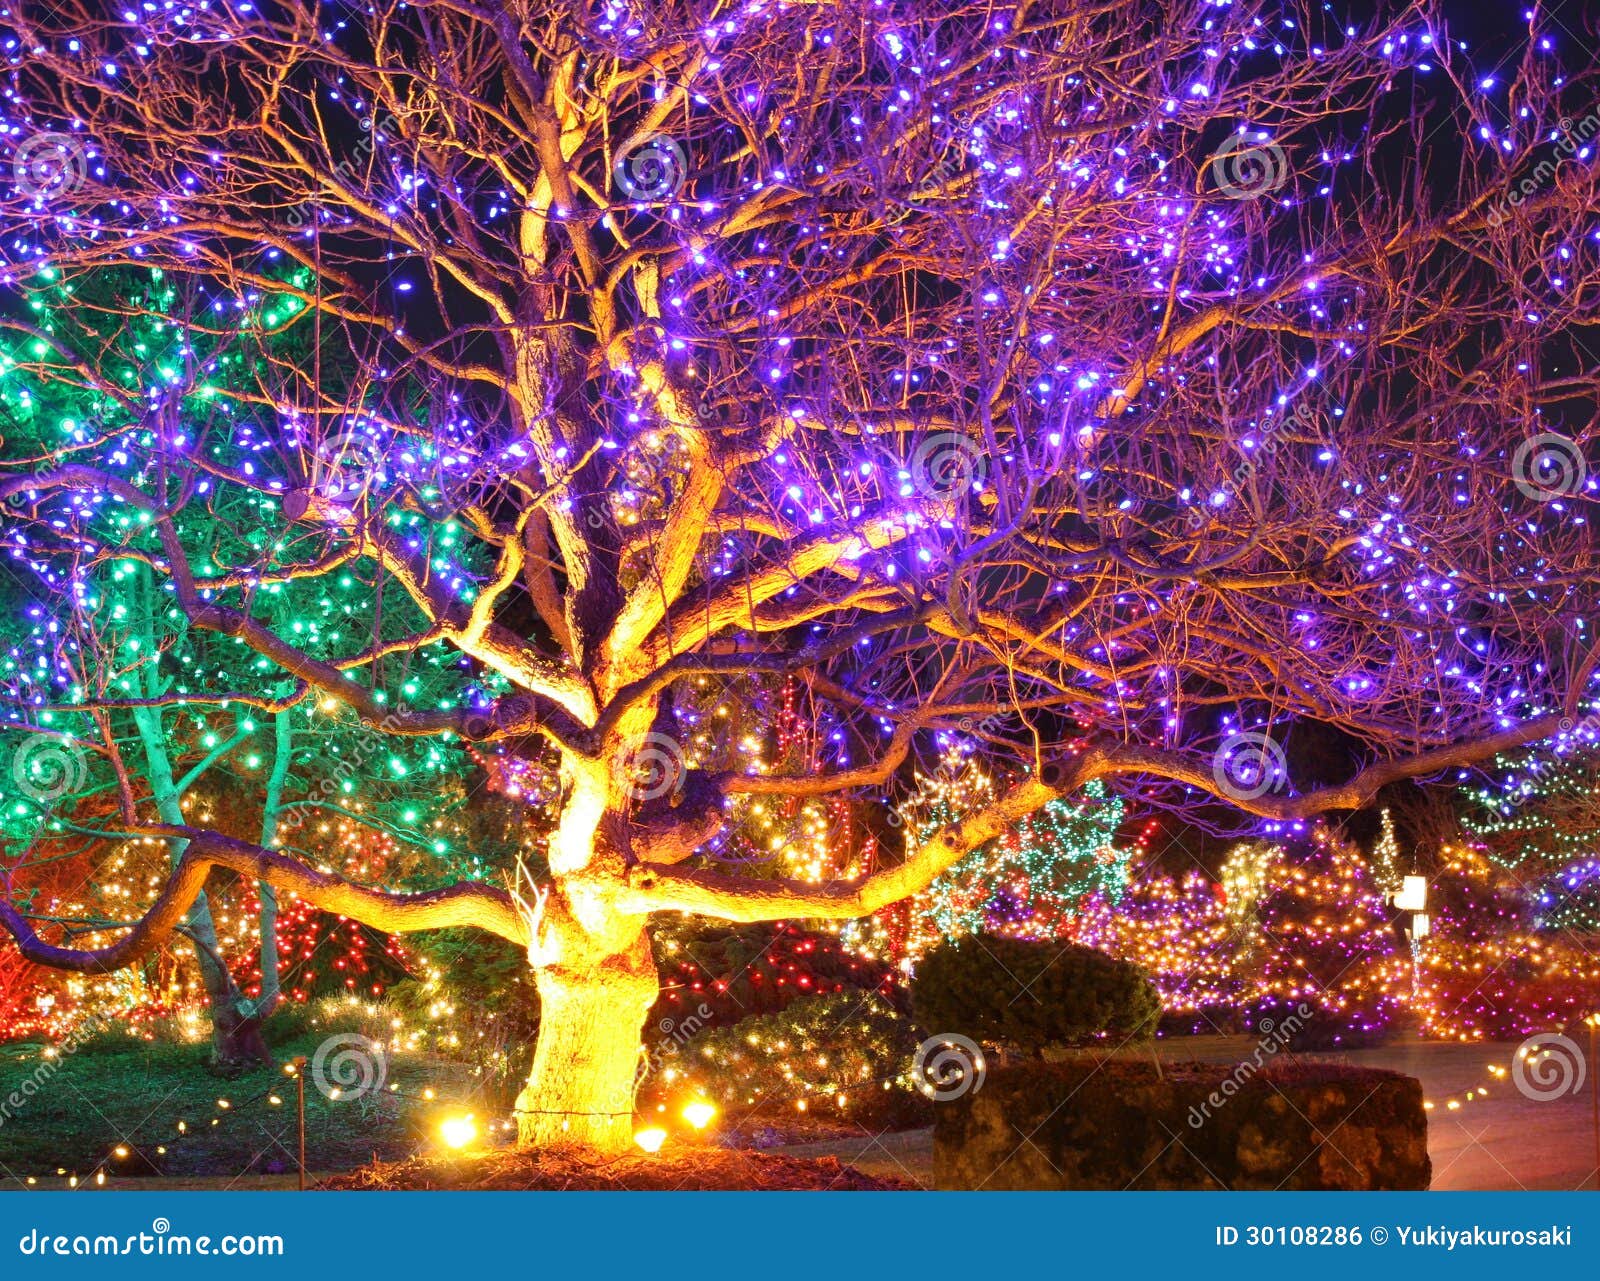 colorful-lights-big-tree-festival-light-van-dusen-gardens-vancouver-bc-canada-30108286.jpg